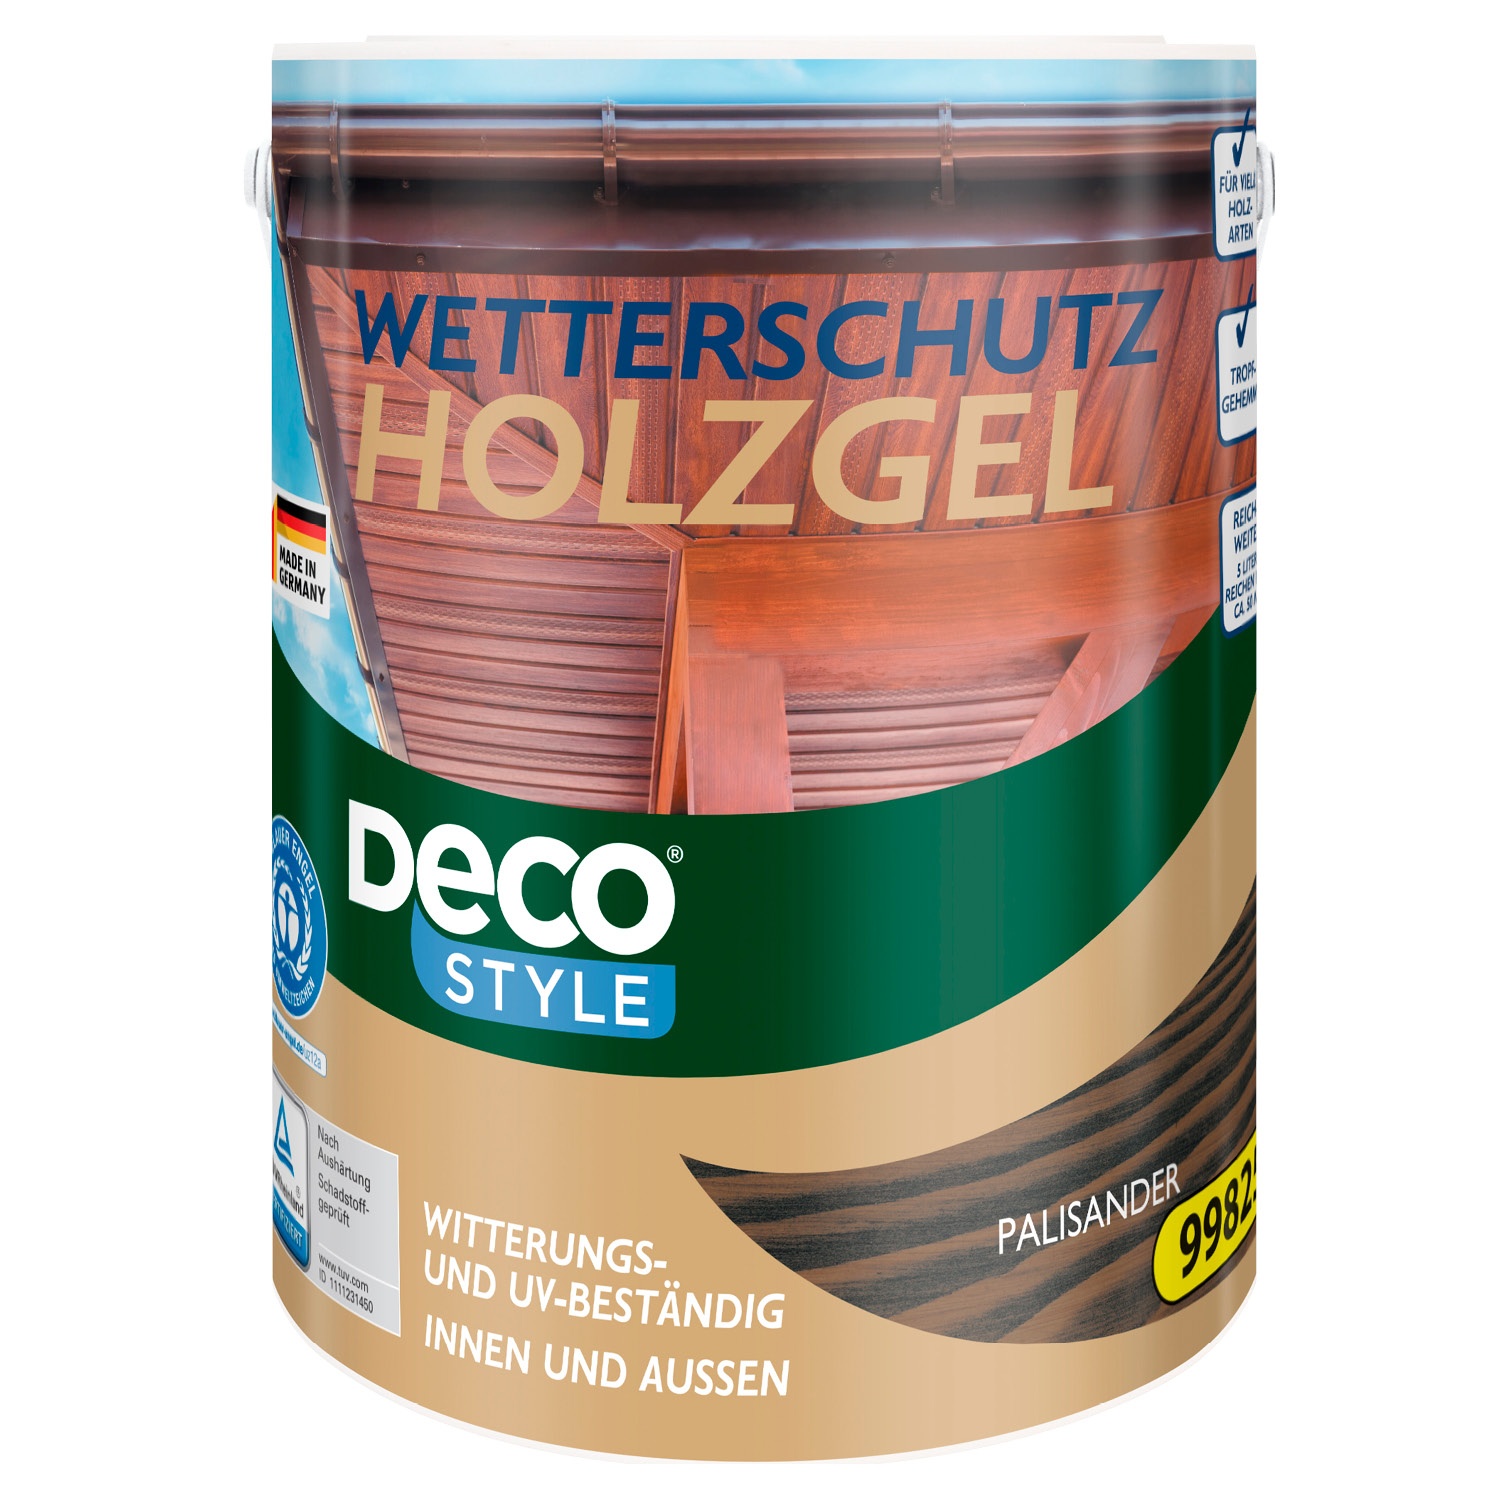 DECO STYLE® Wetterschutz-Holzgel 5 l